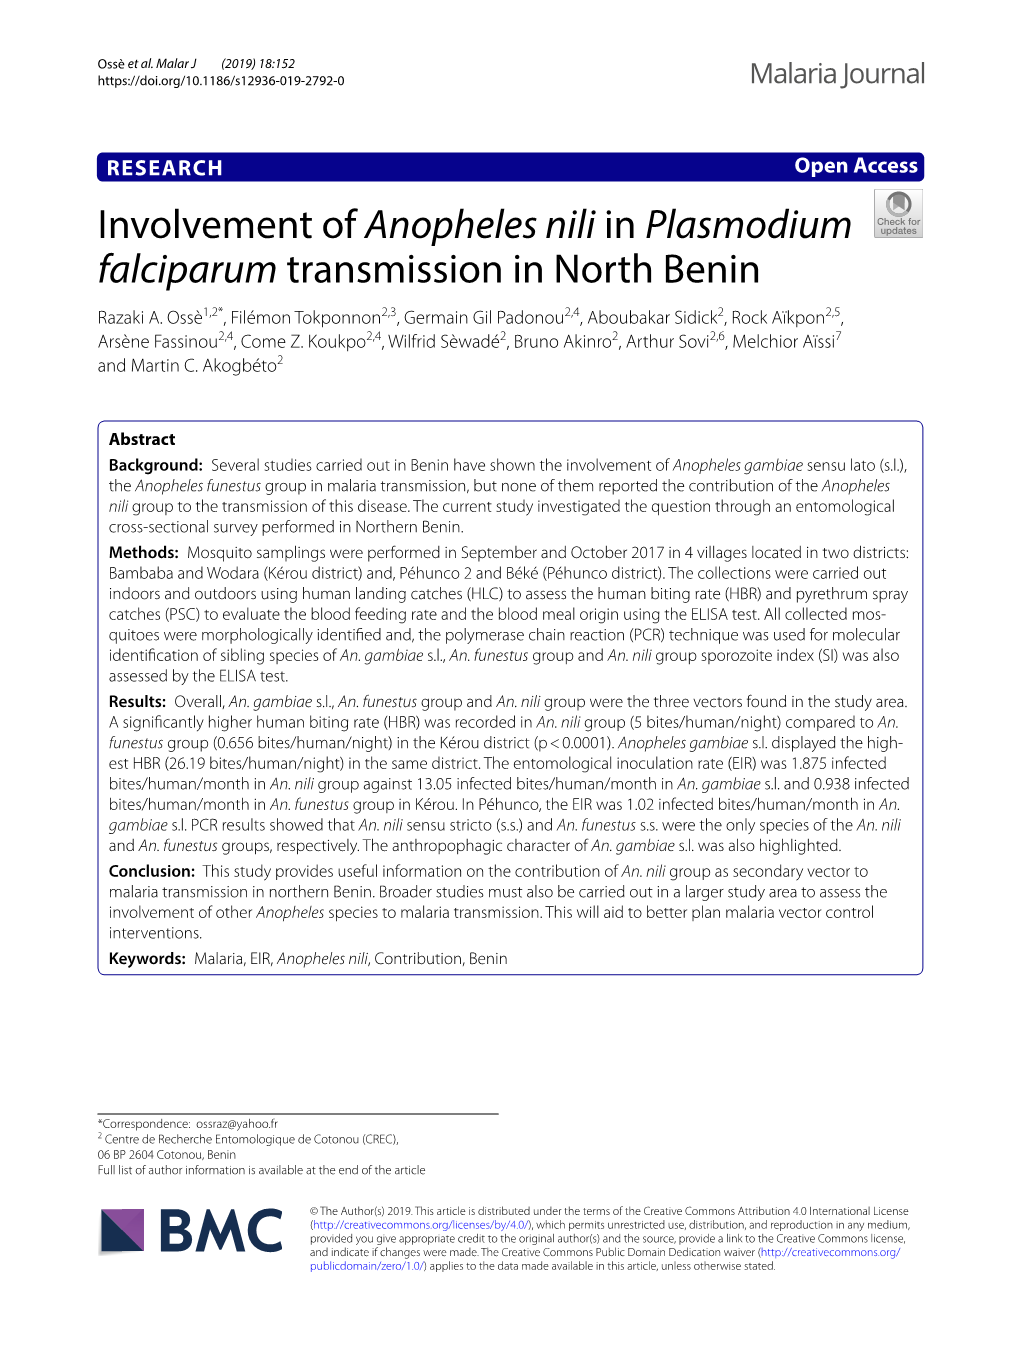 Involvement of Anopheles Nili in Plasmodium Falciparum Transmission in North Benin Razaki A